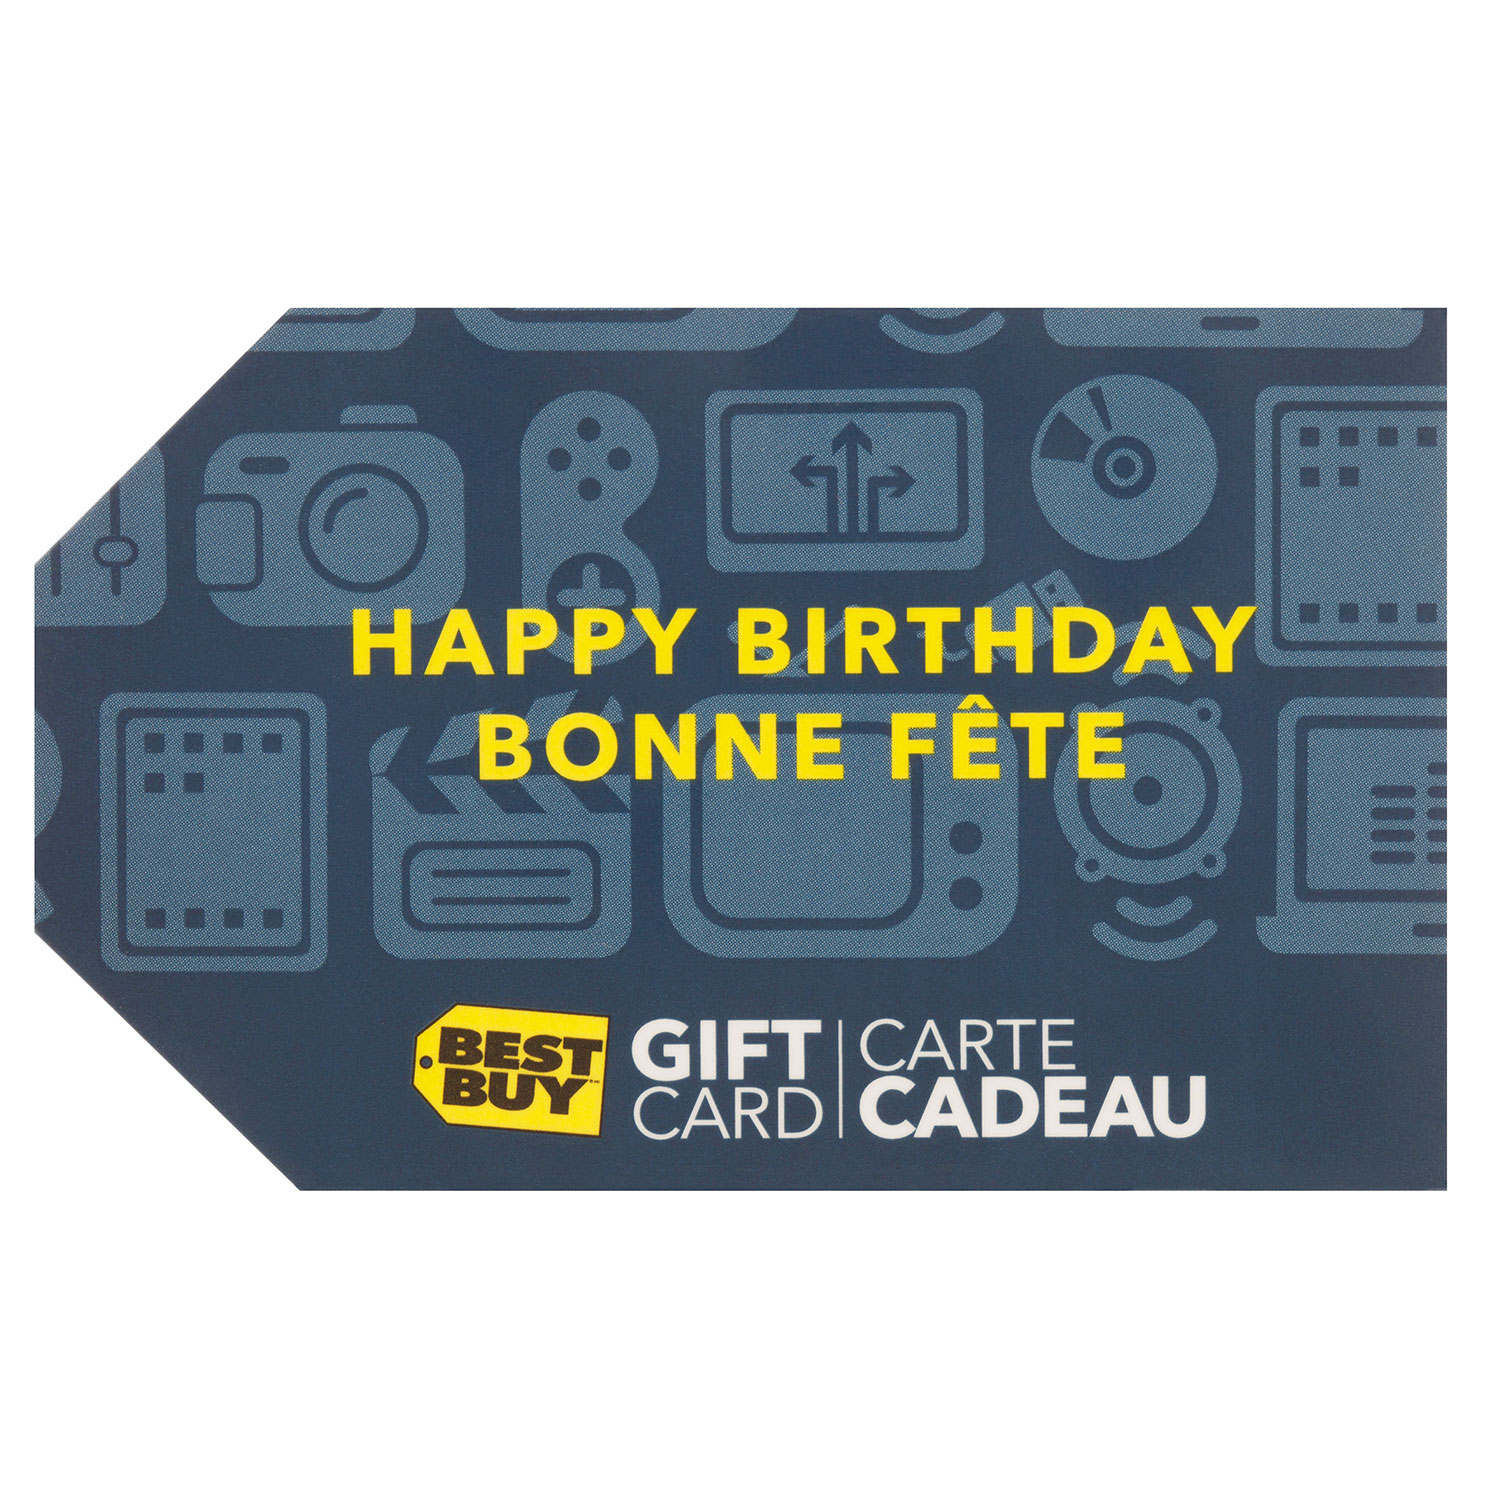 Best Buy Birthday Gift Card - $50